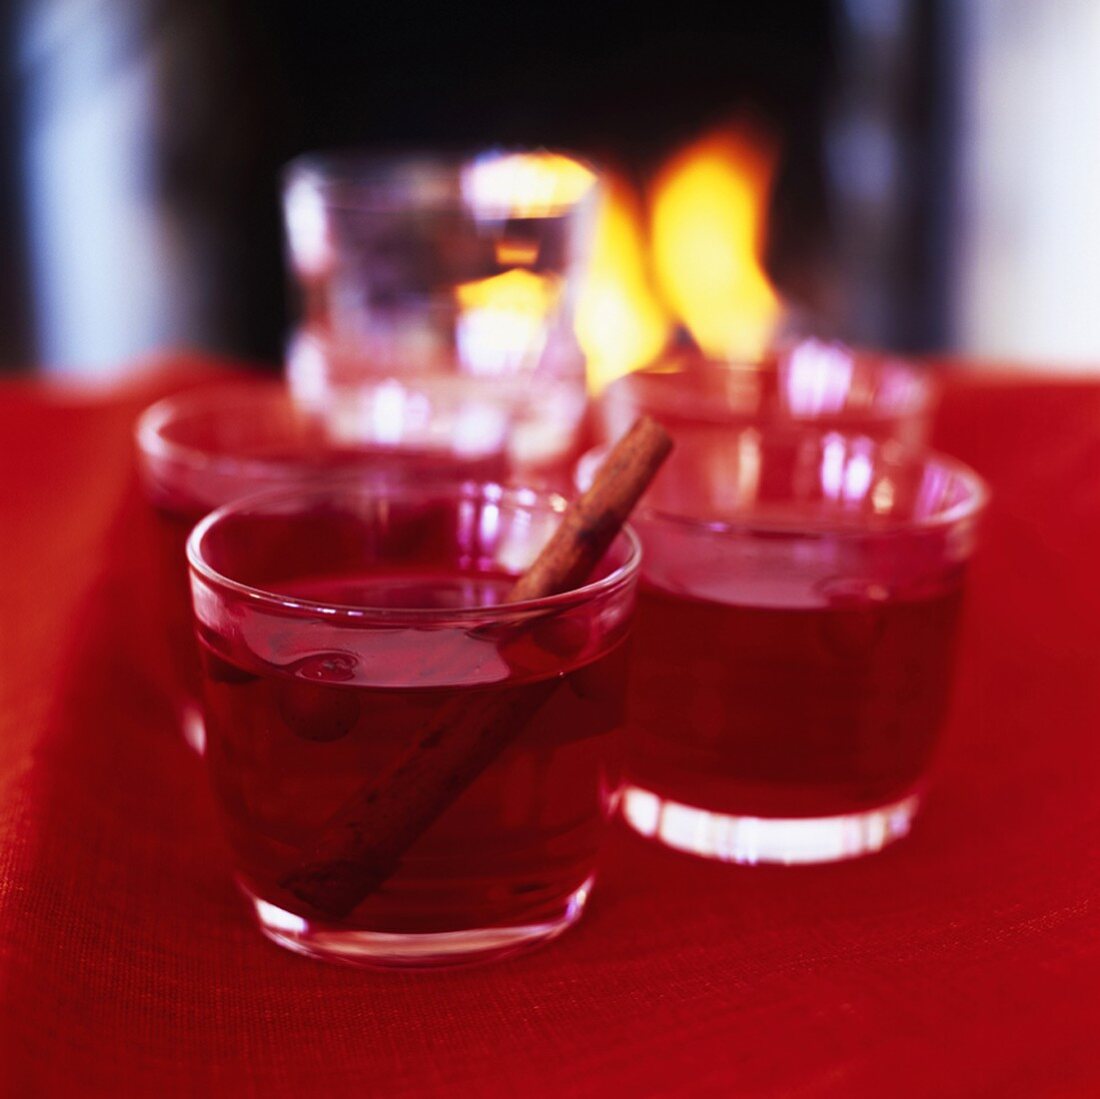 Warm cranberry drinks with cinnamon sticks